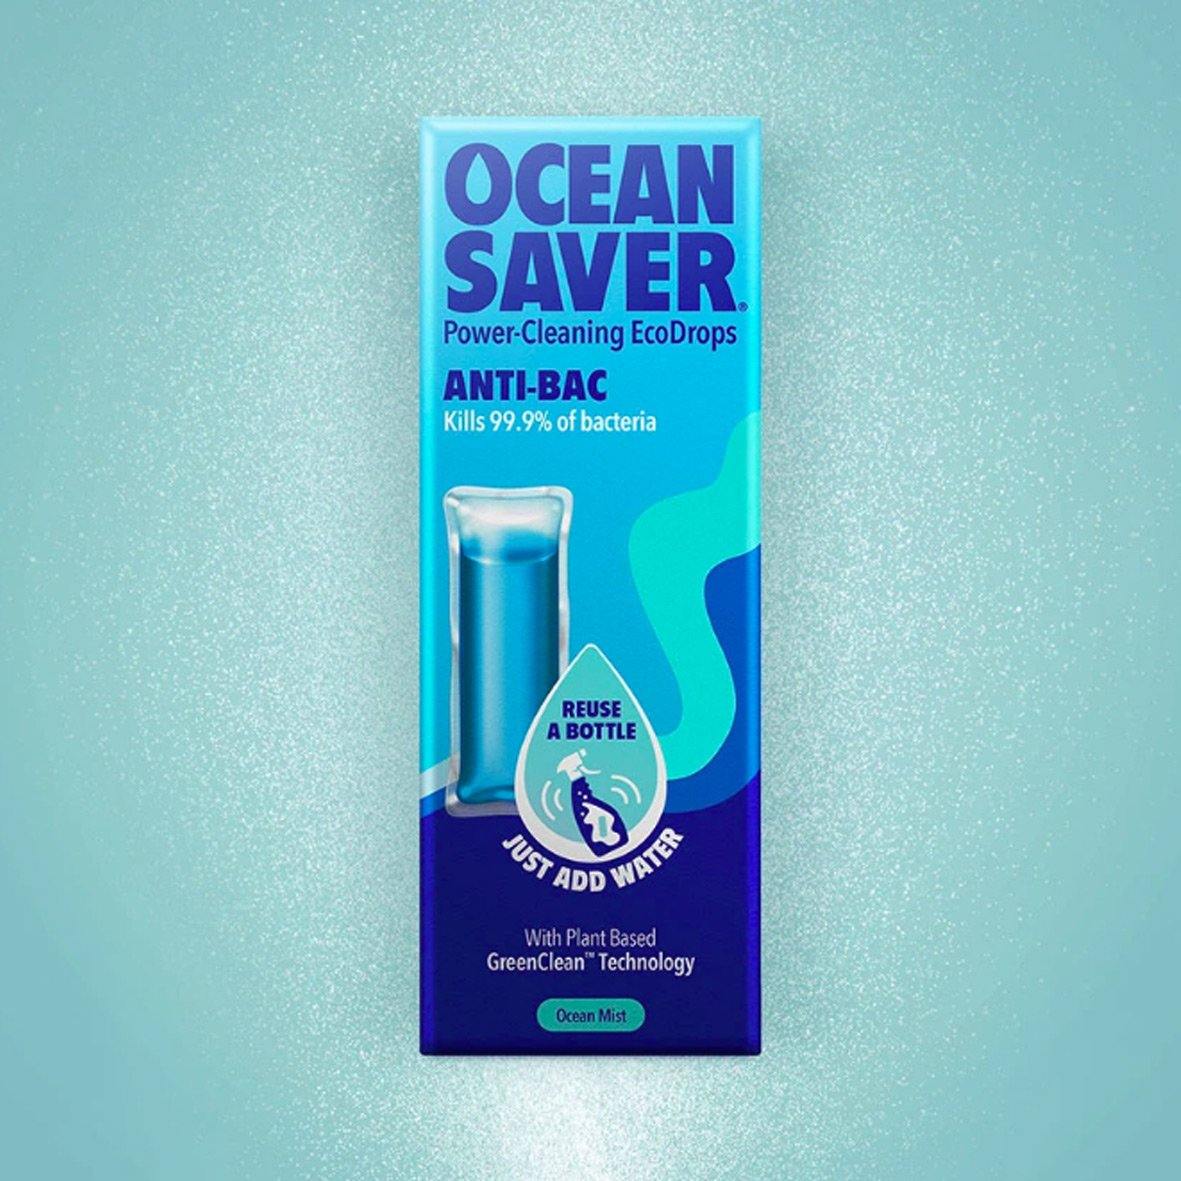 OceanSaver EcoDrop Refill - All Purpose Floor Cleaner - 10ml